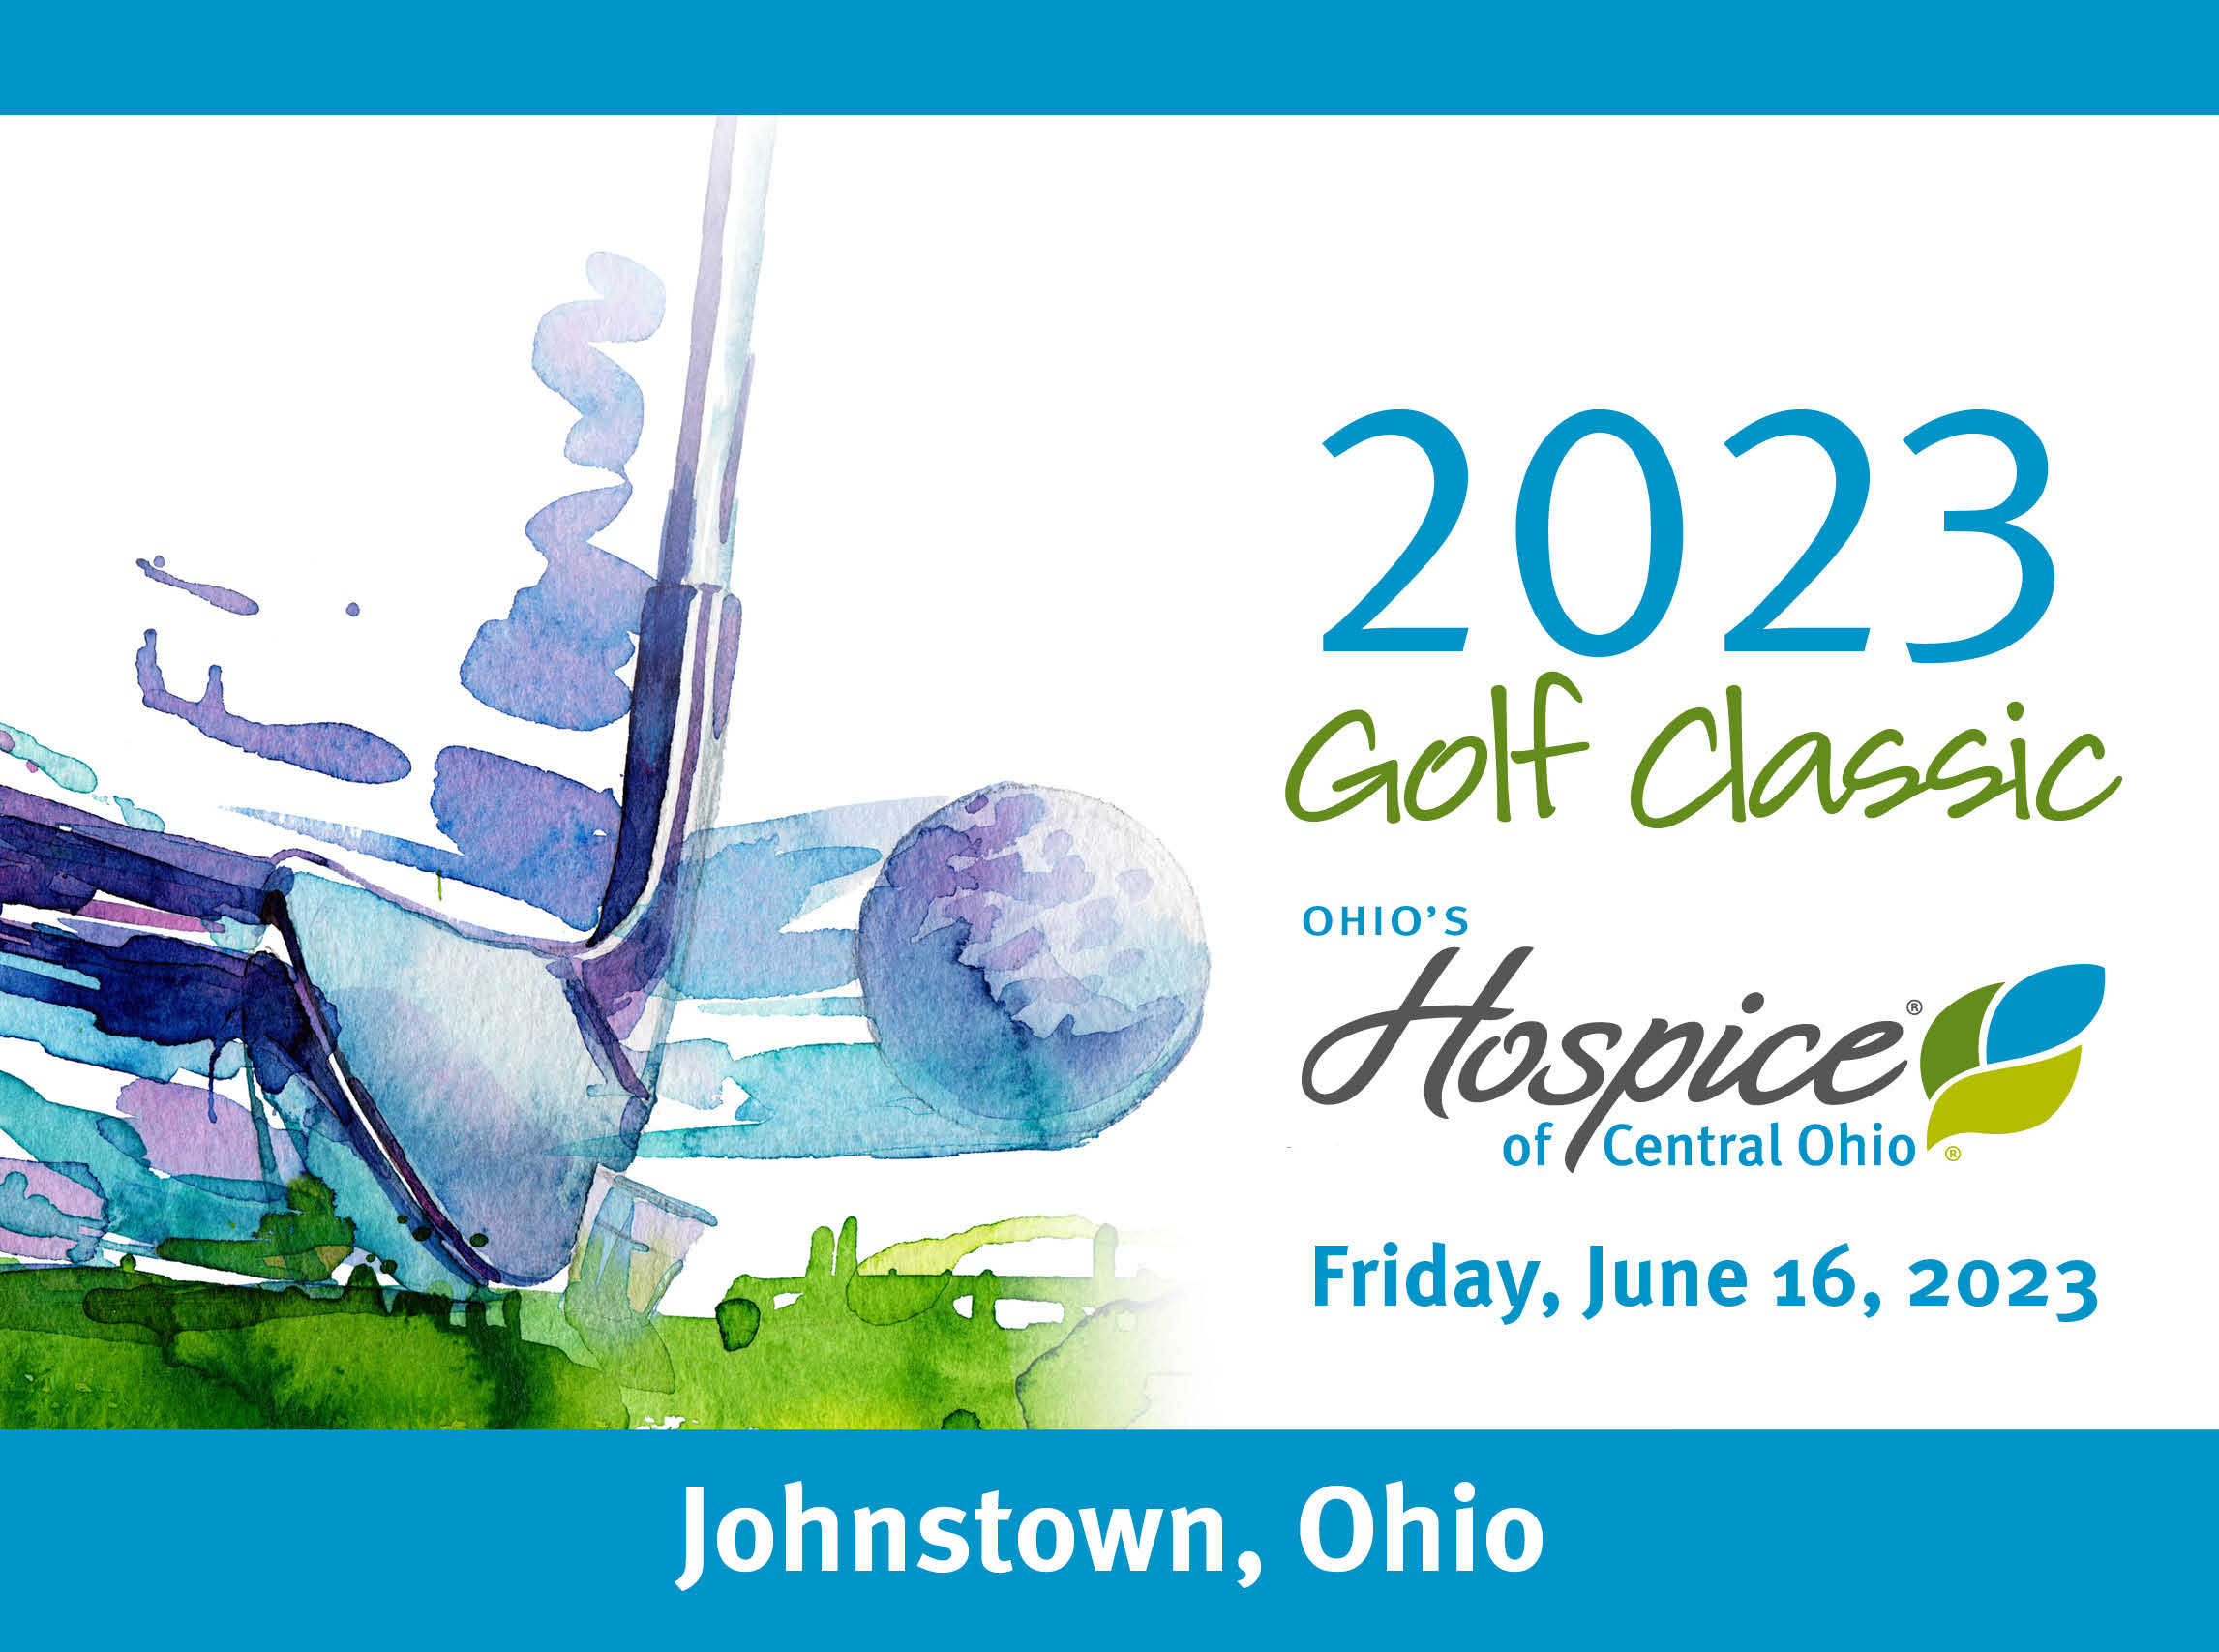 2023 Golf Classic, Ohio's Hospice of Central Ohio, Friday, June 16, 2023, Johnstown, Ohio